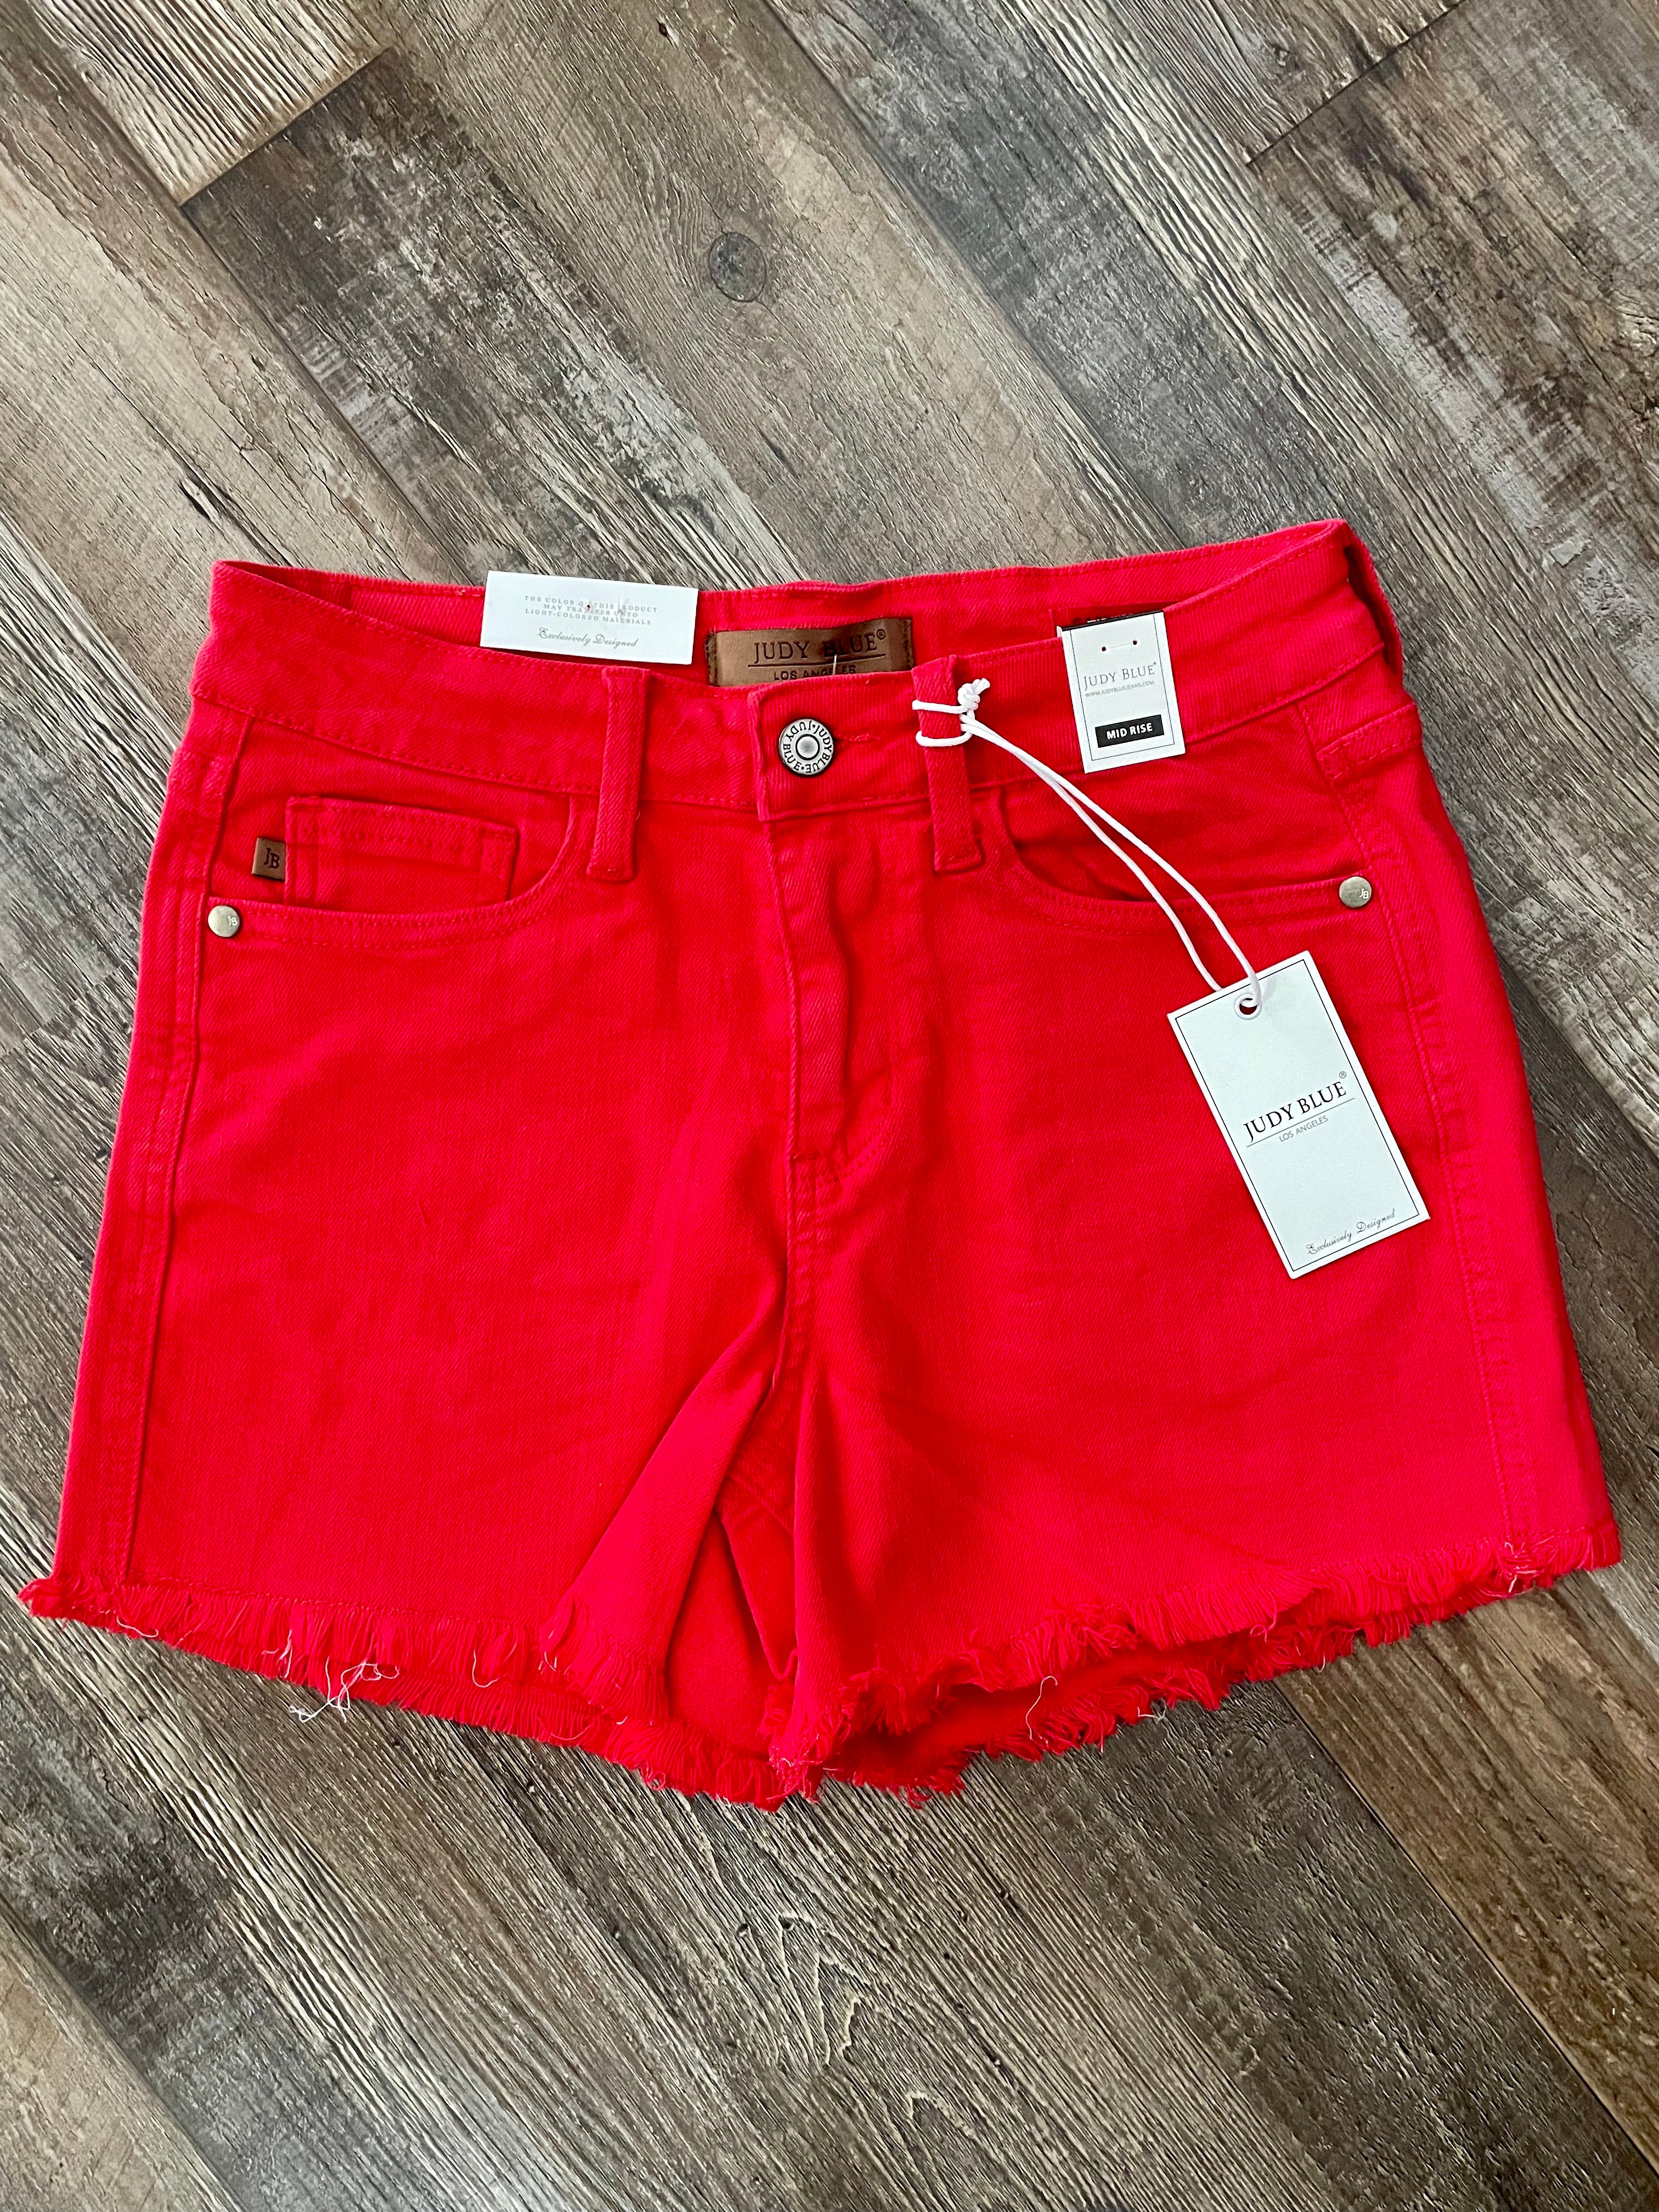 JB Red Shorts